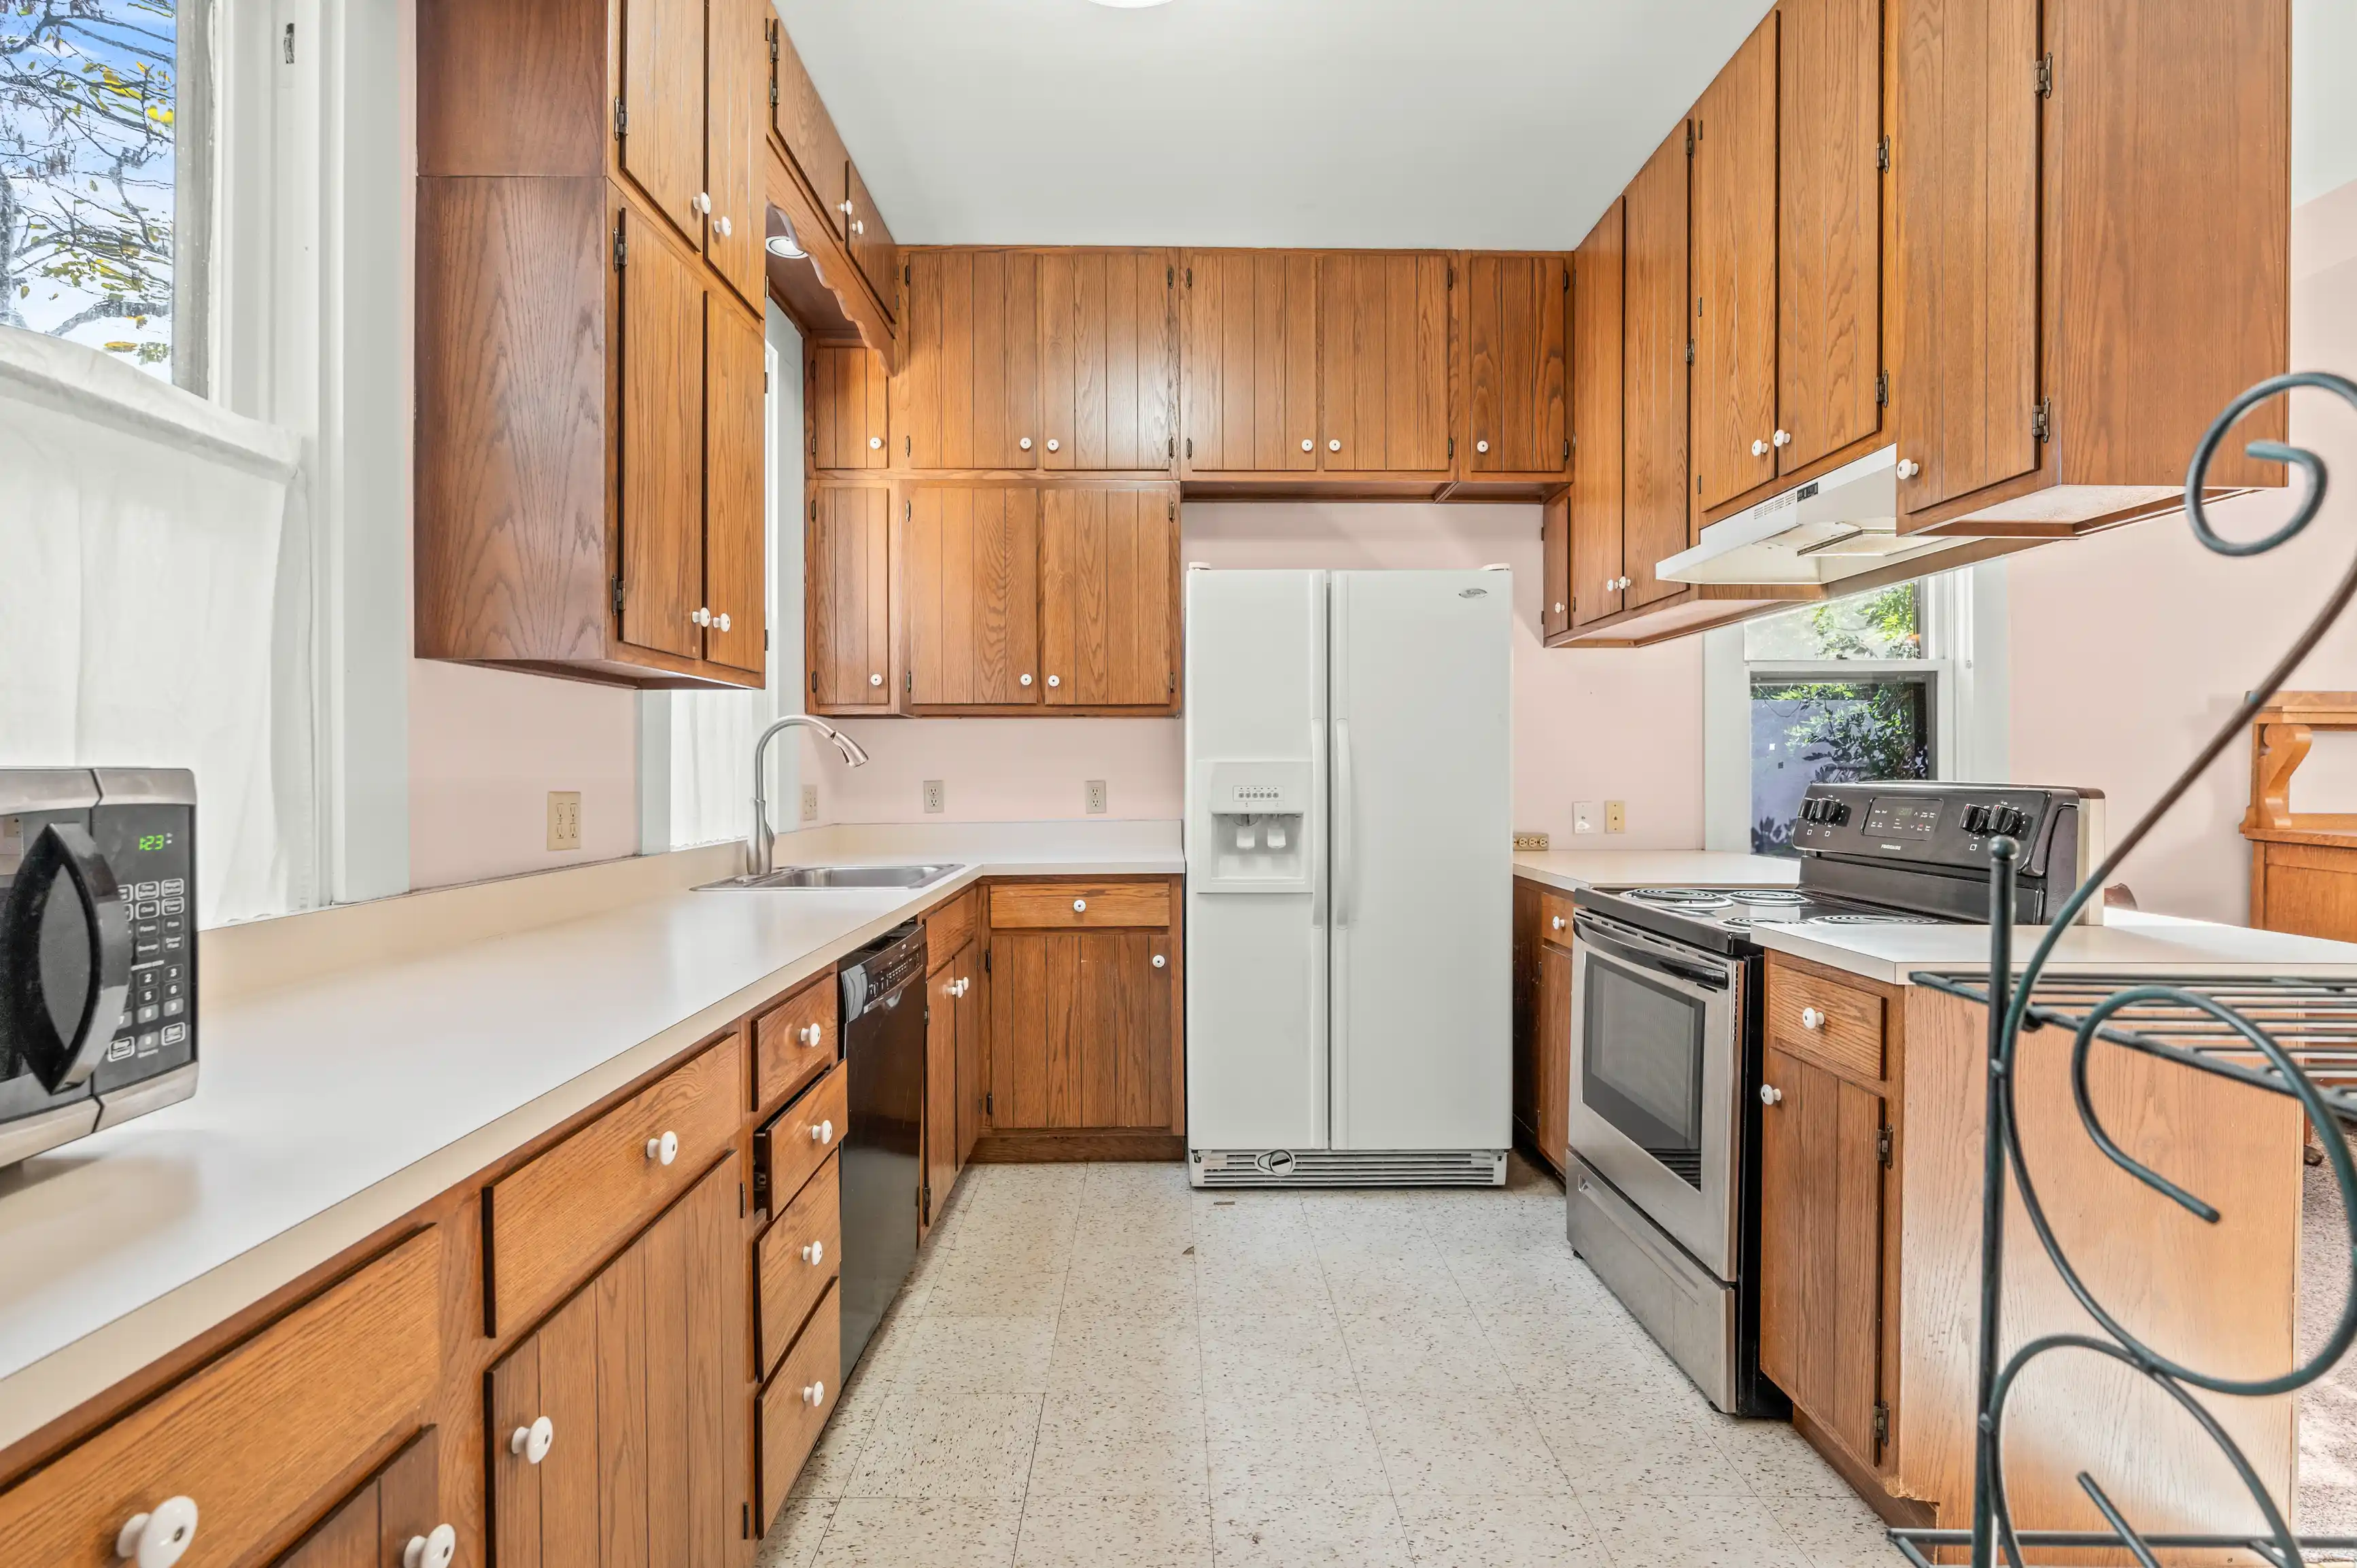 Bright kitchen interior with wooden cabinets, white appliances, and linoleum flooring.